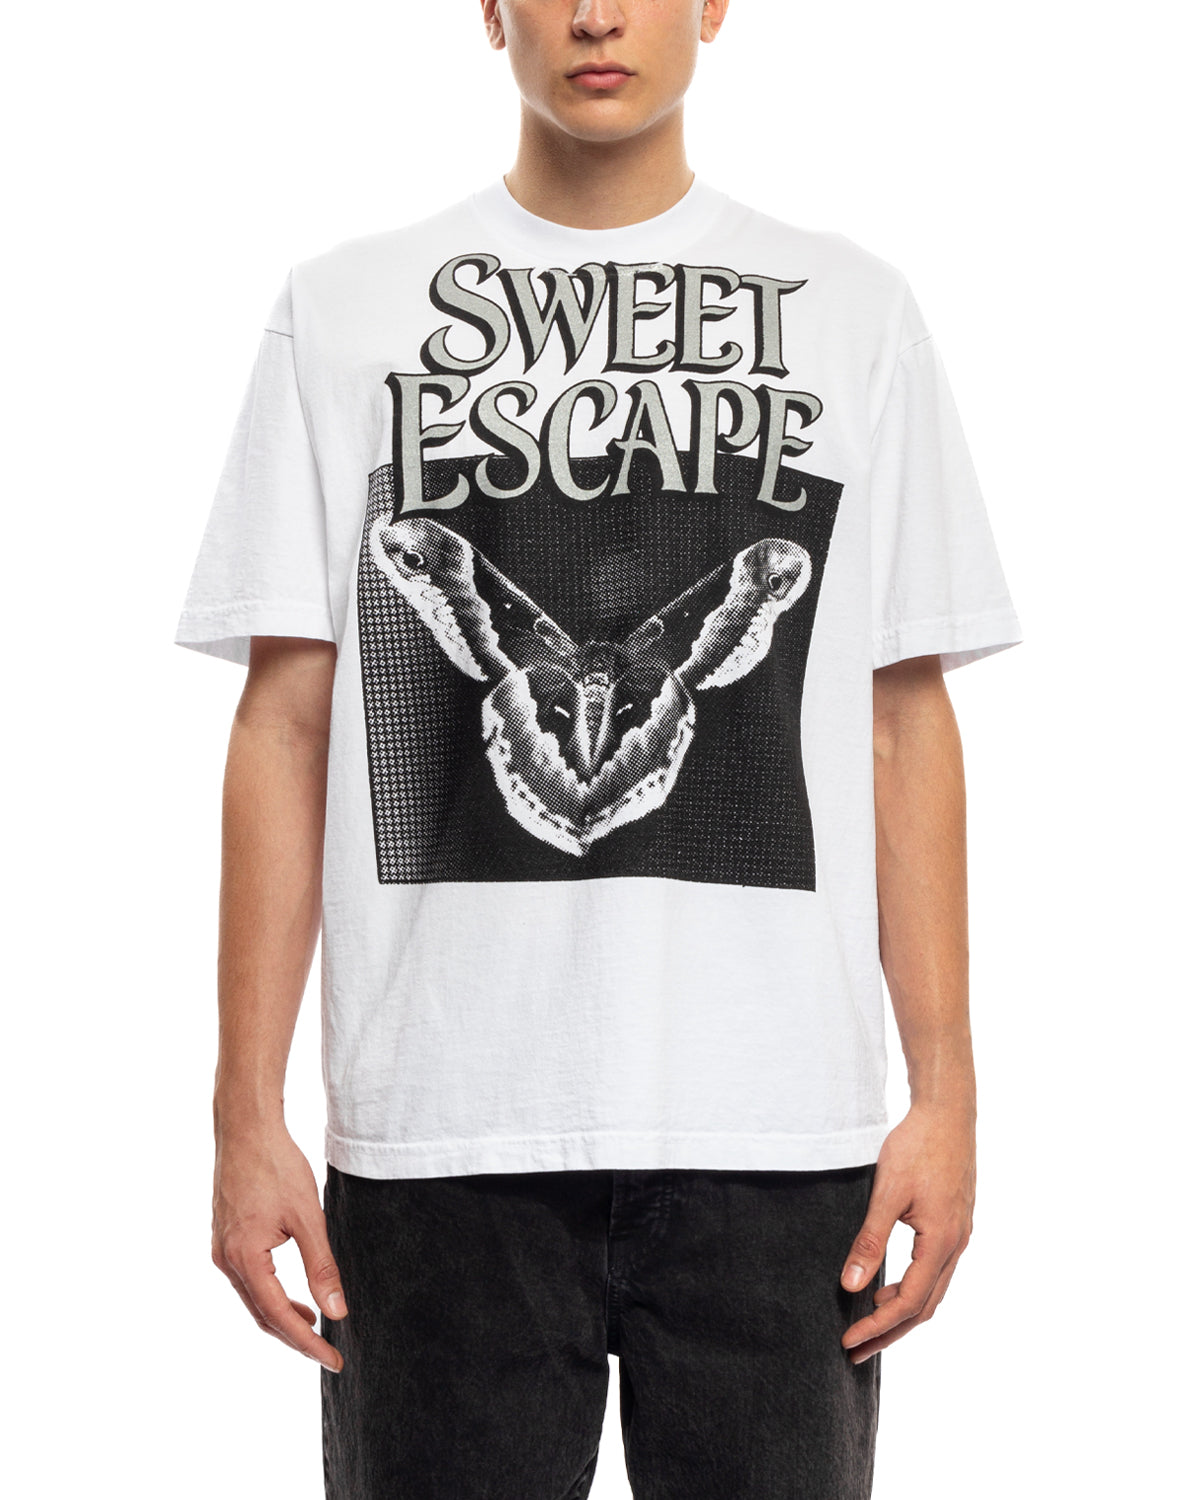 Sweet Escape T-Shirt White